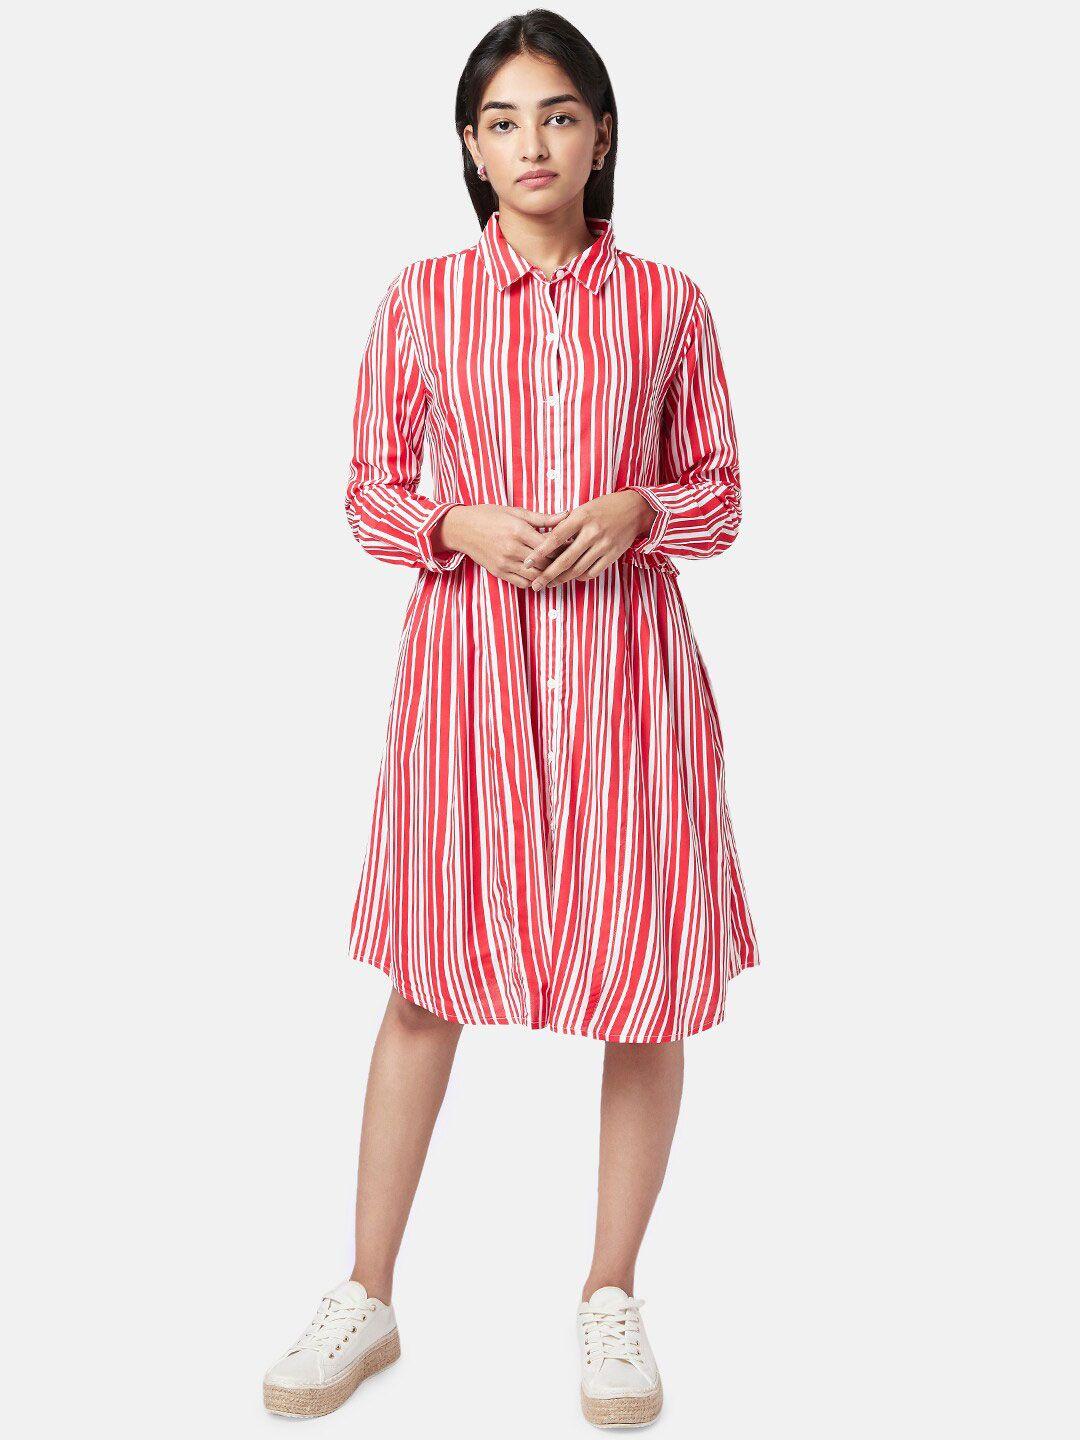 yu by pantaloons red striped ethnic shirt dress